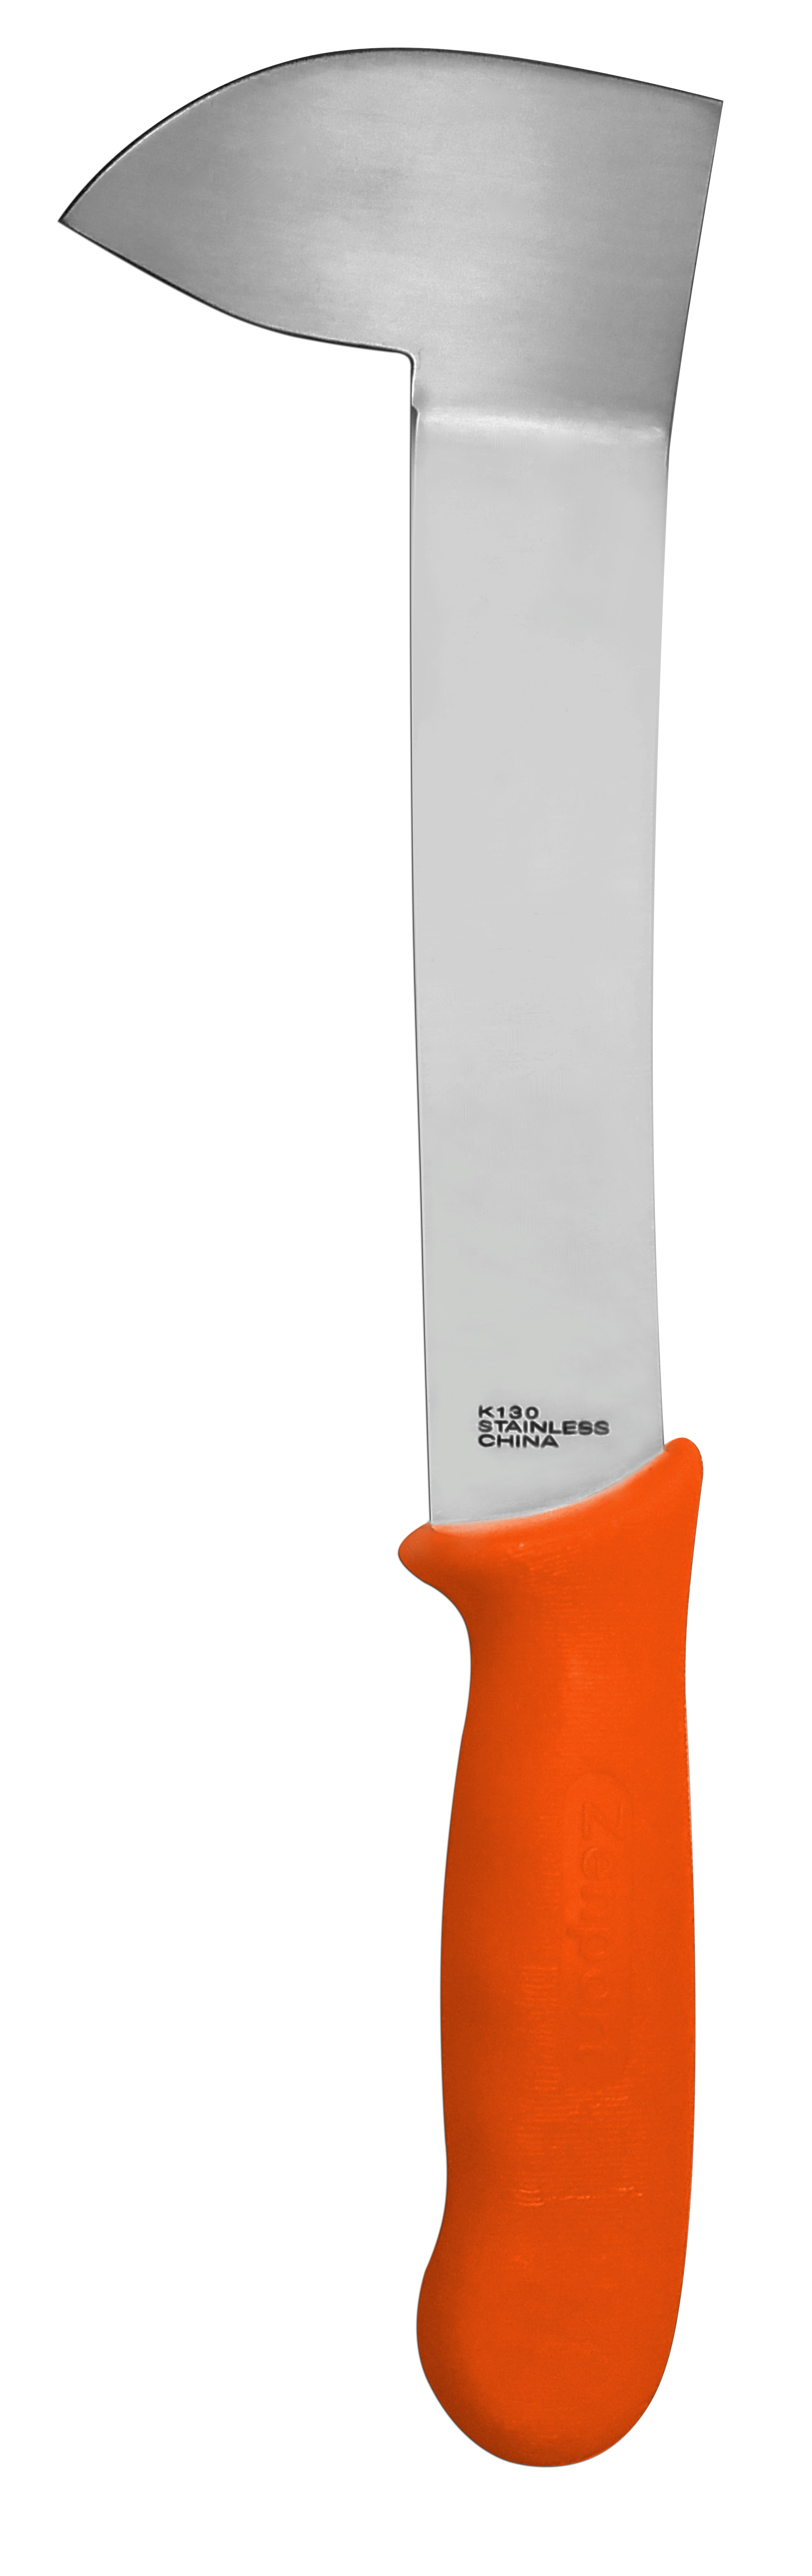 Zenport Celery Knife K130 Celery Harvest Knife, Stainless Steel 8.5-Inch Blade, Orange Plastic Handle